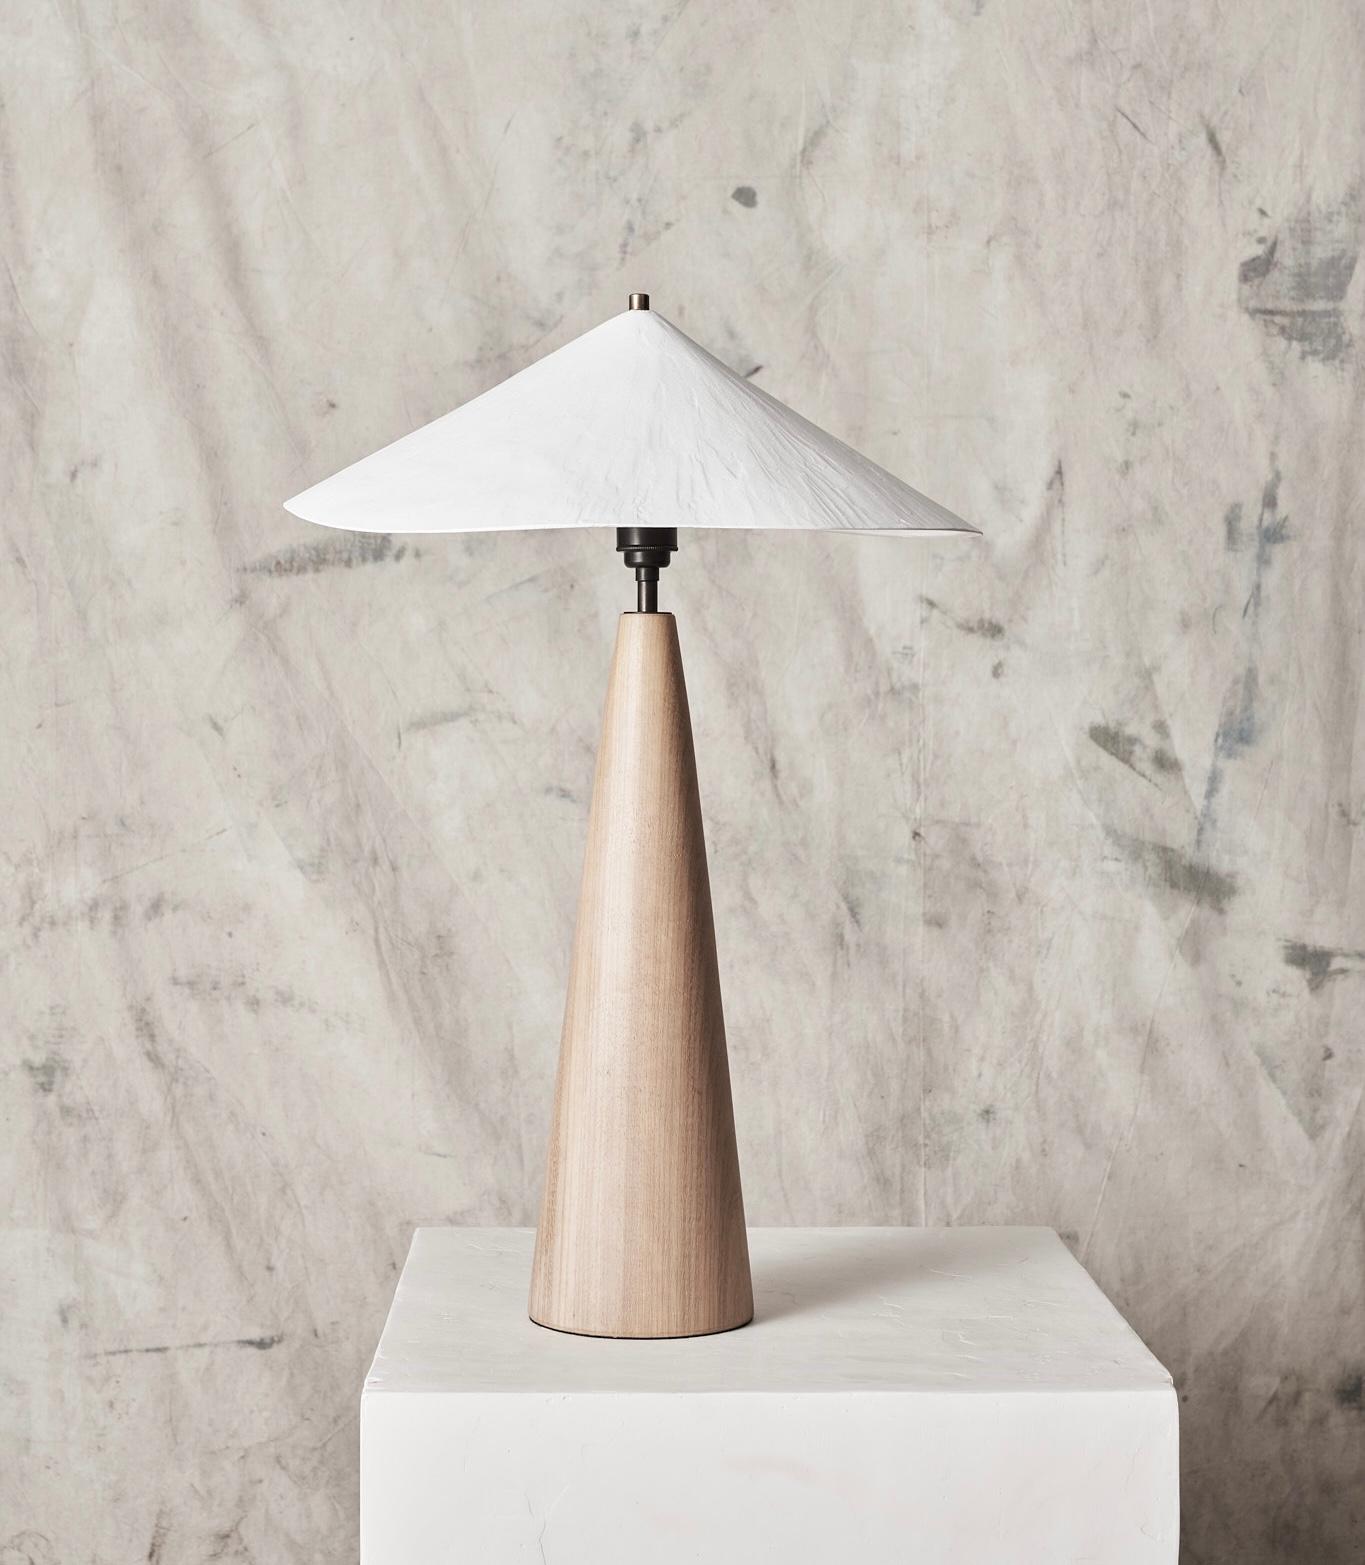 British Wobble Table Lamp, ebonized For Sale